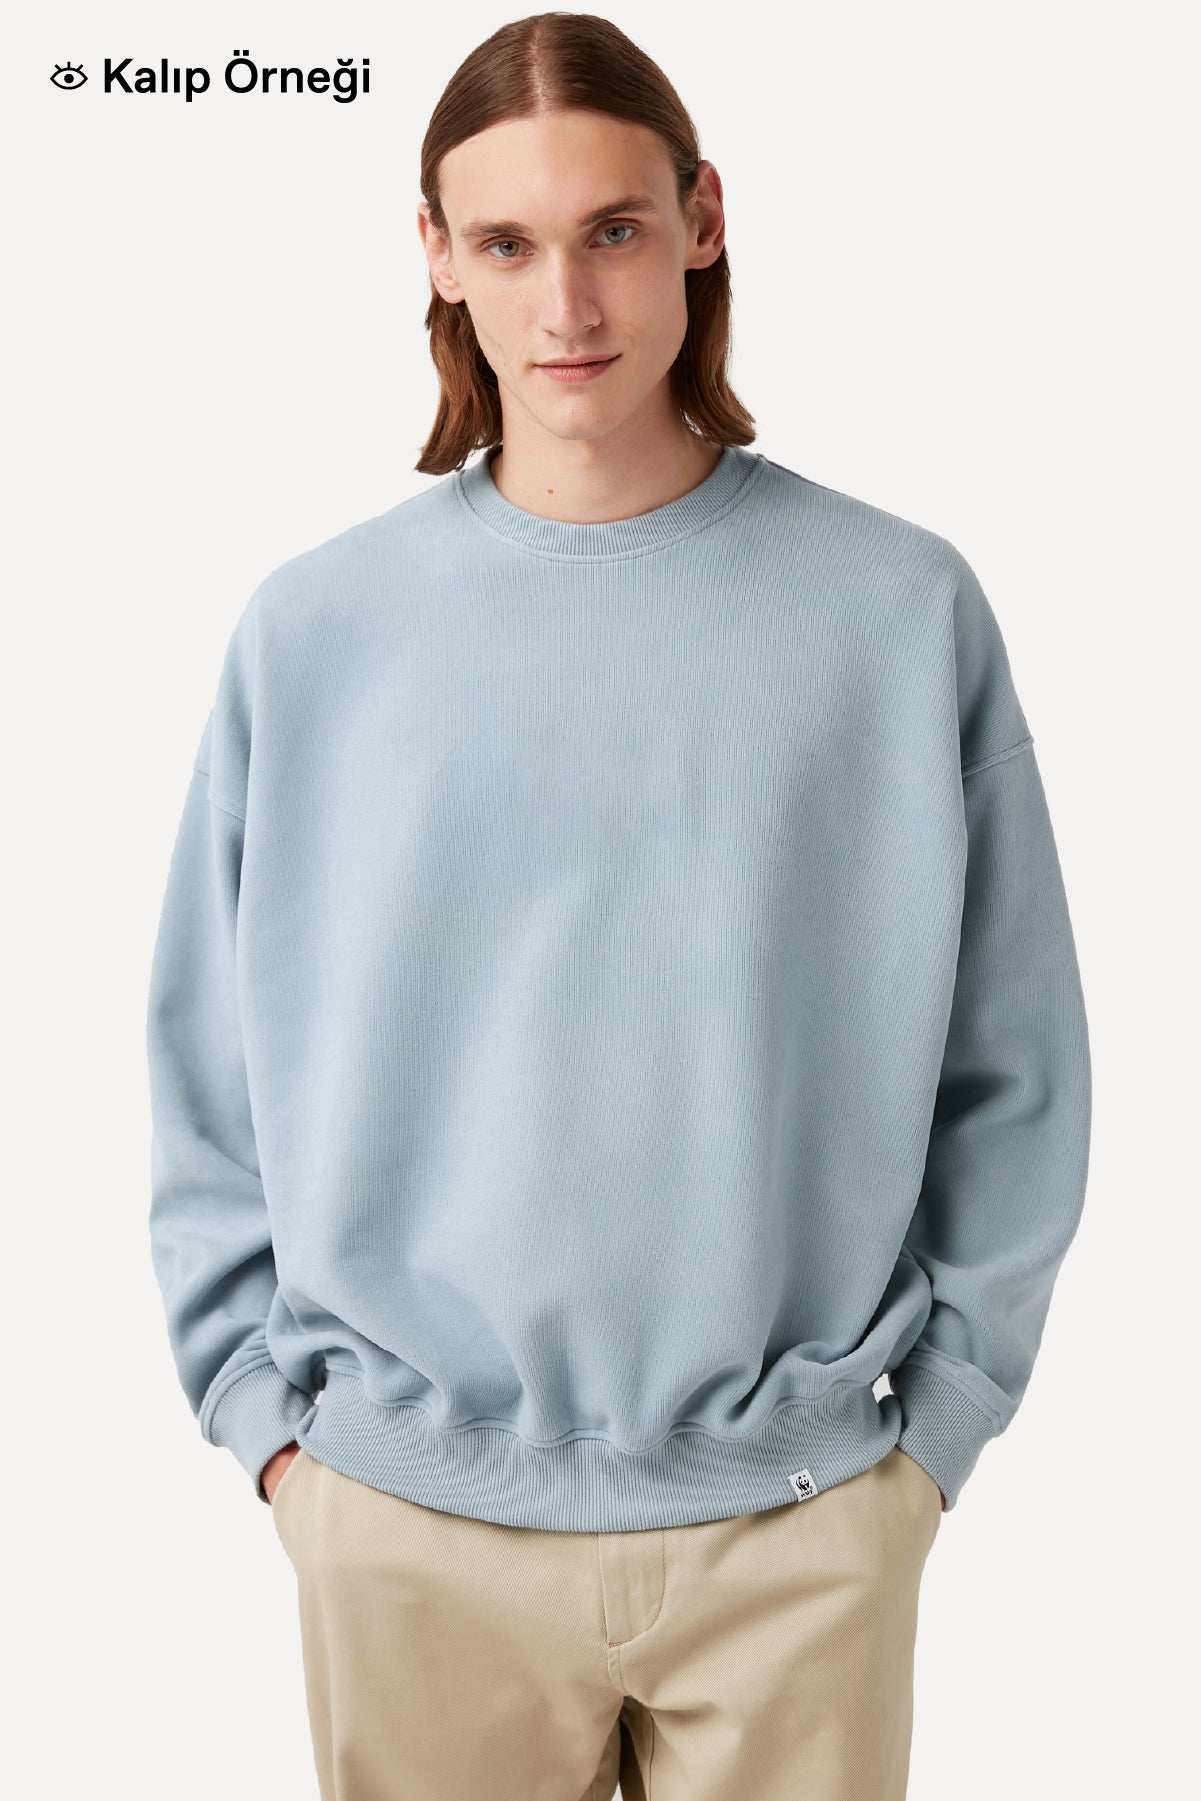 Yavru İmparator Penguen Super Soft Oversize Sweatshirt - Mor